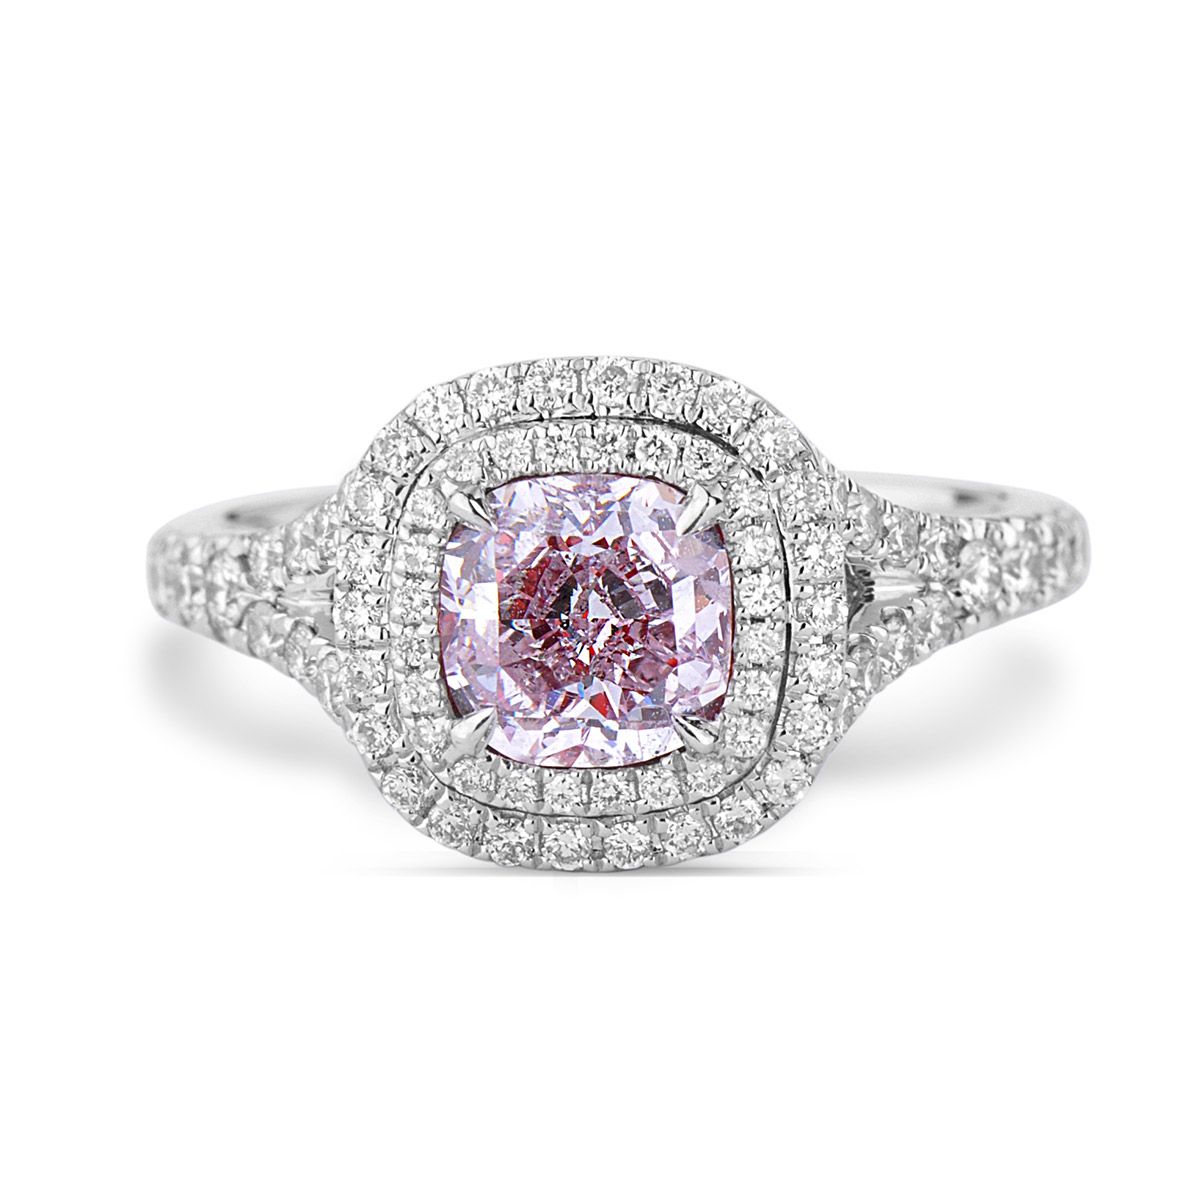 Light Pink Diamond Ring, 1.01 Ct. (1.51 Ct. TW), Cushion shape, GIA Certified, 2181114285